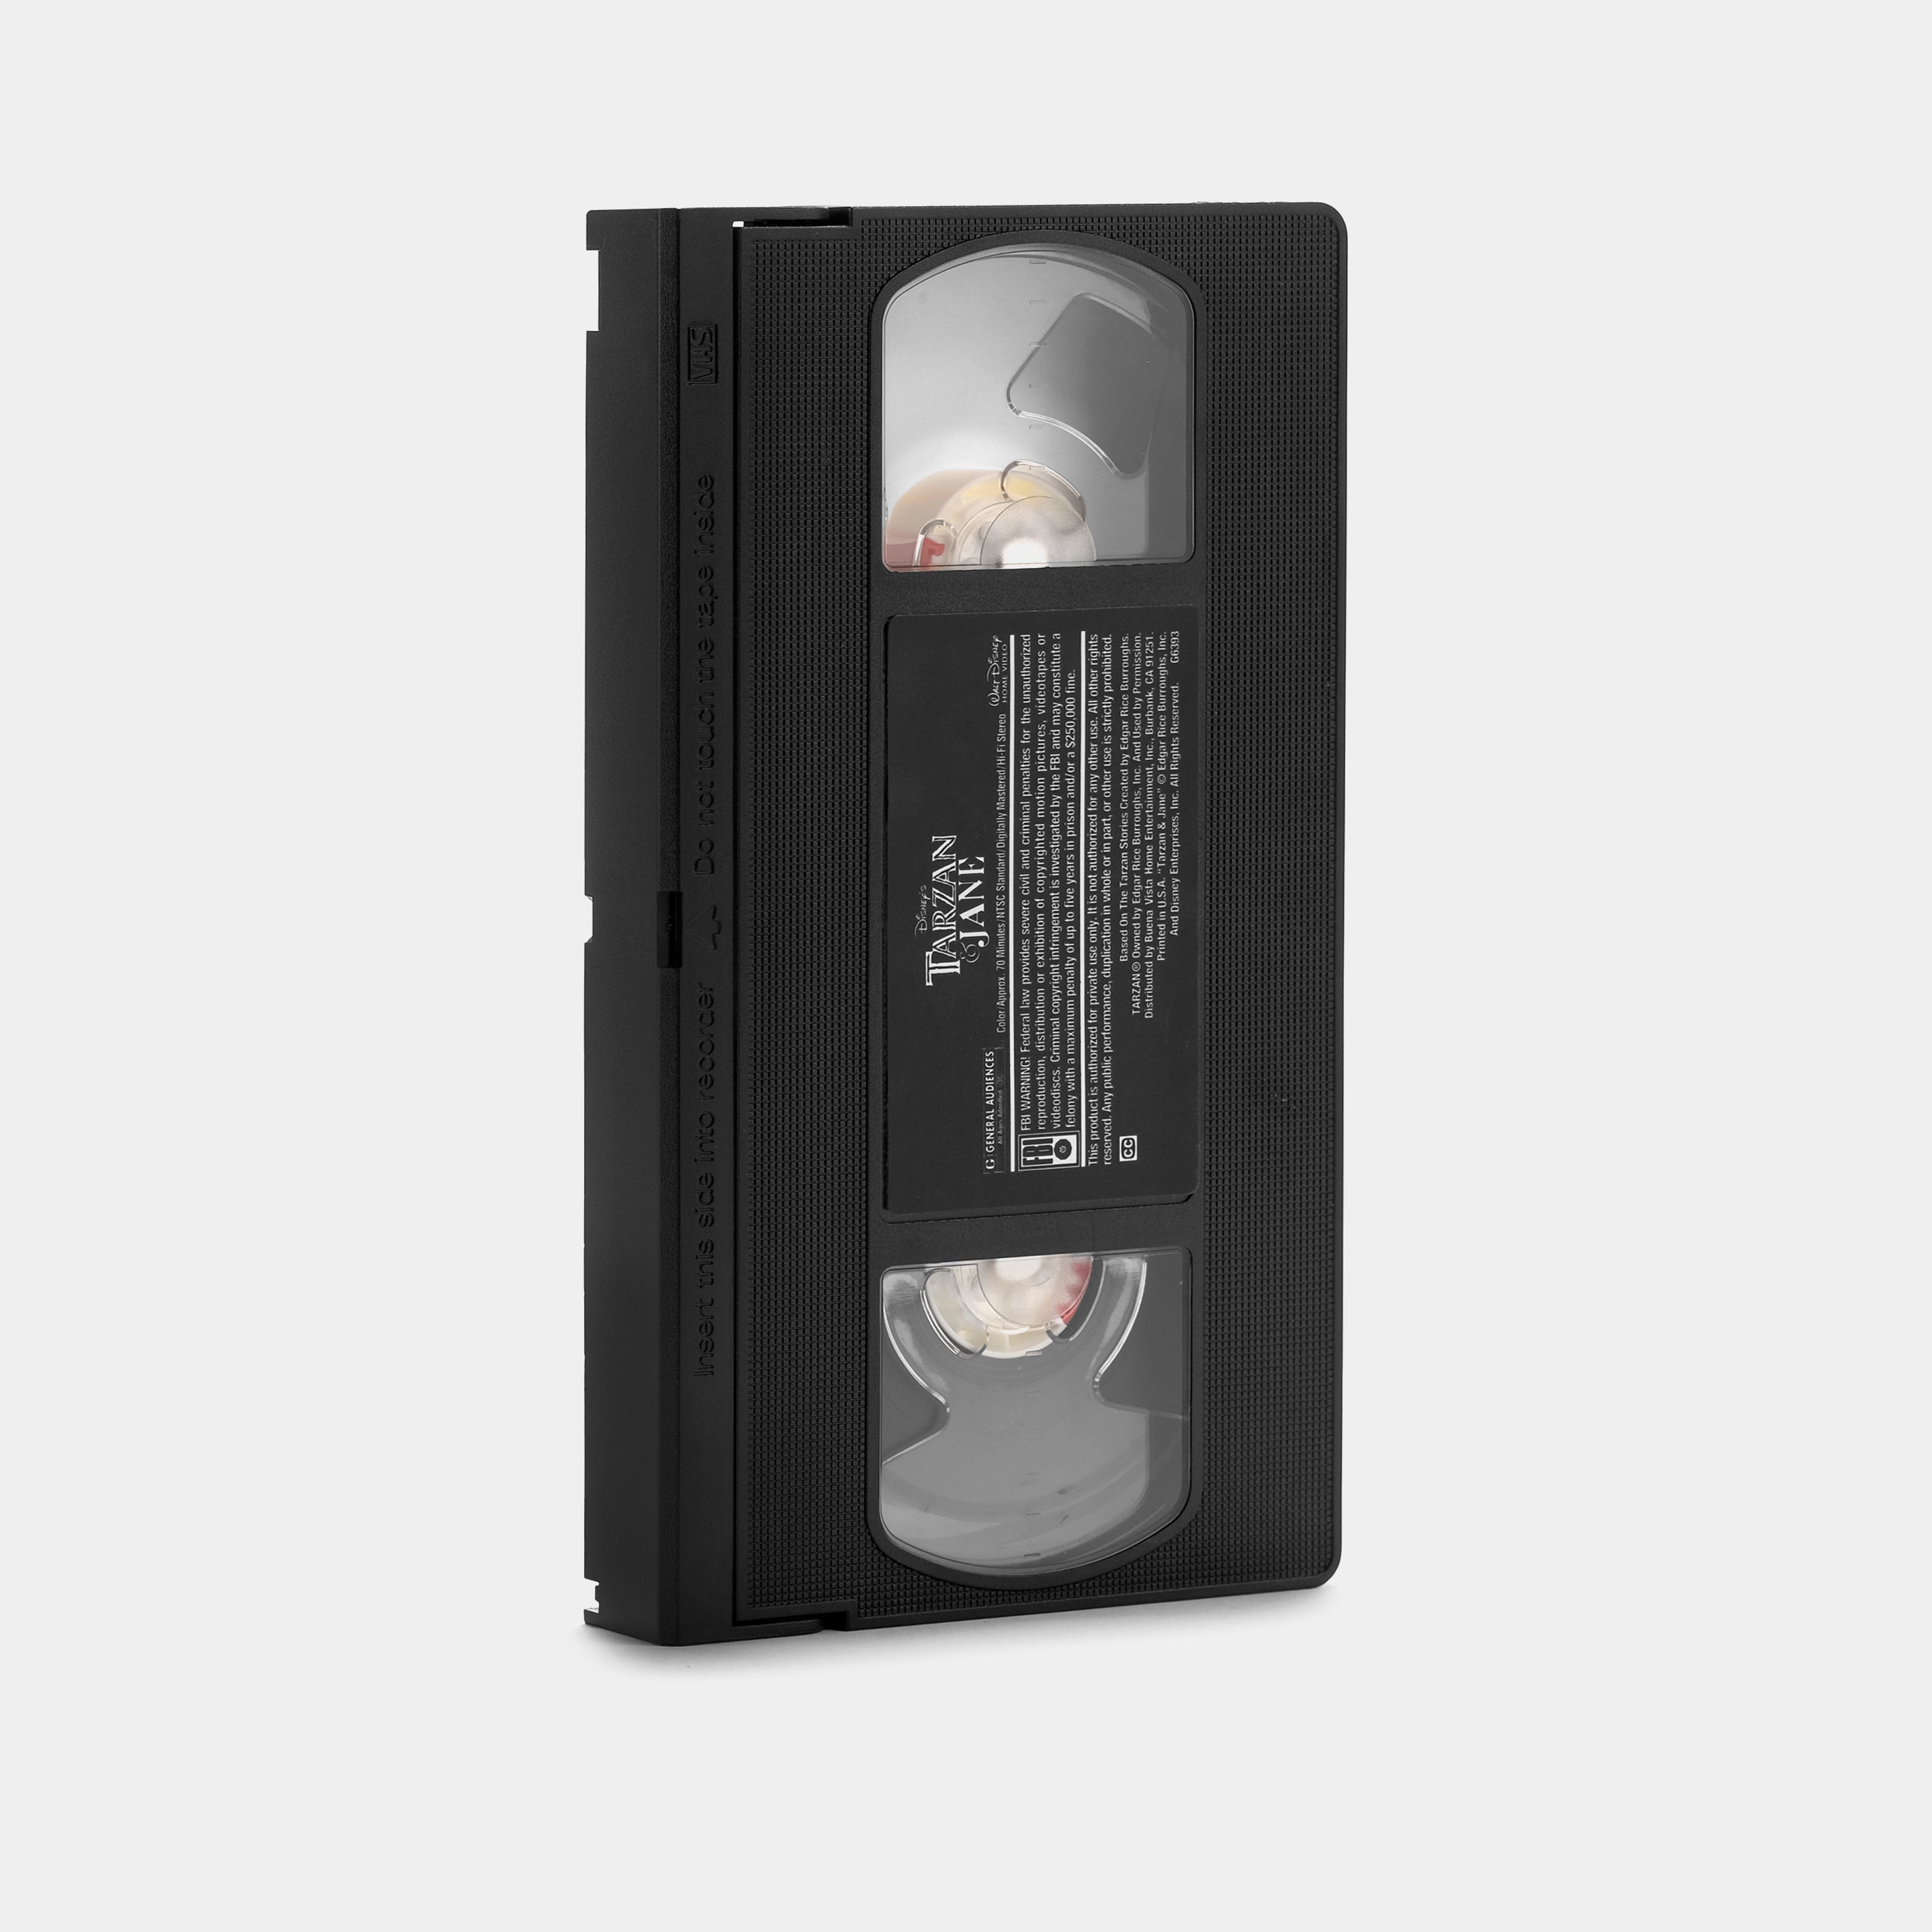 Tarzan & Jane VHS Tape